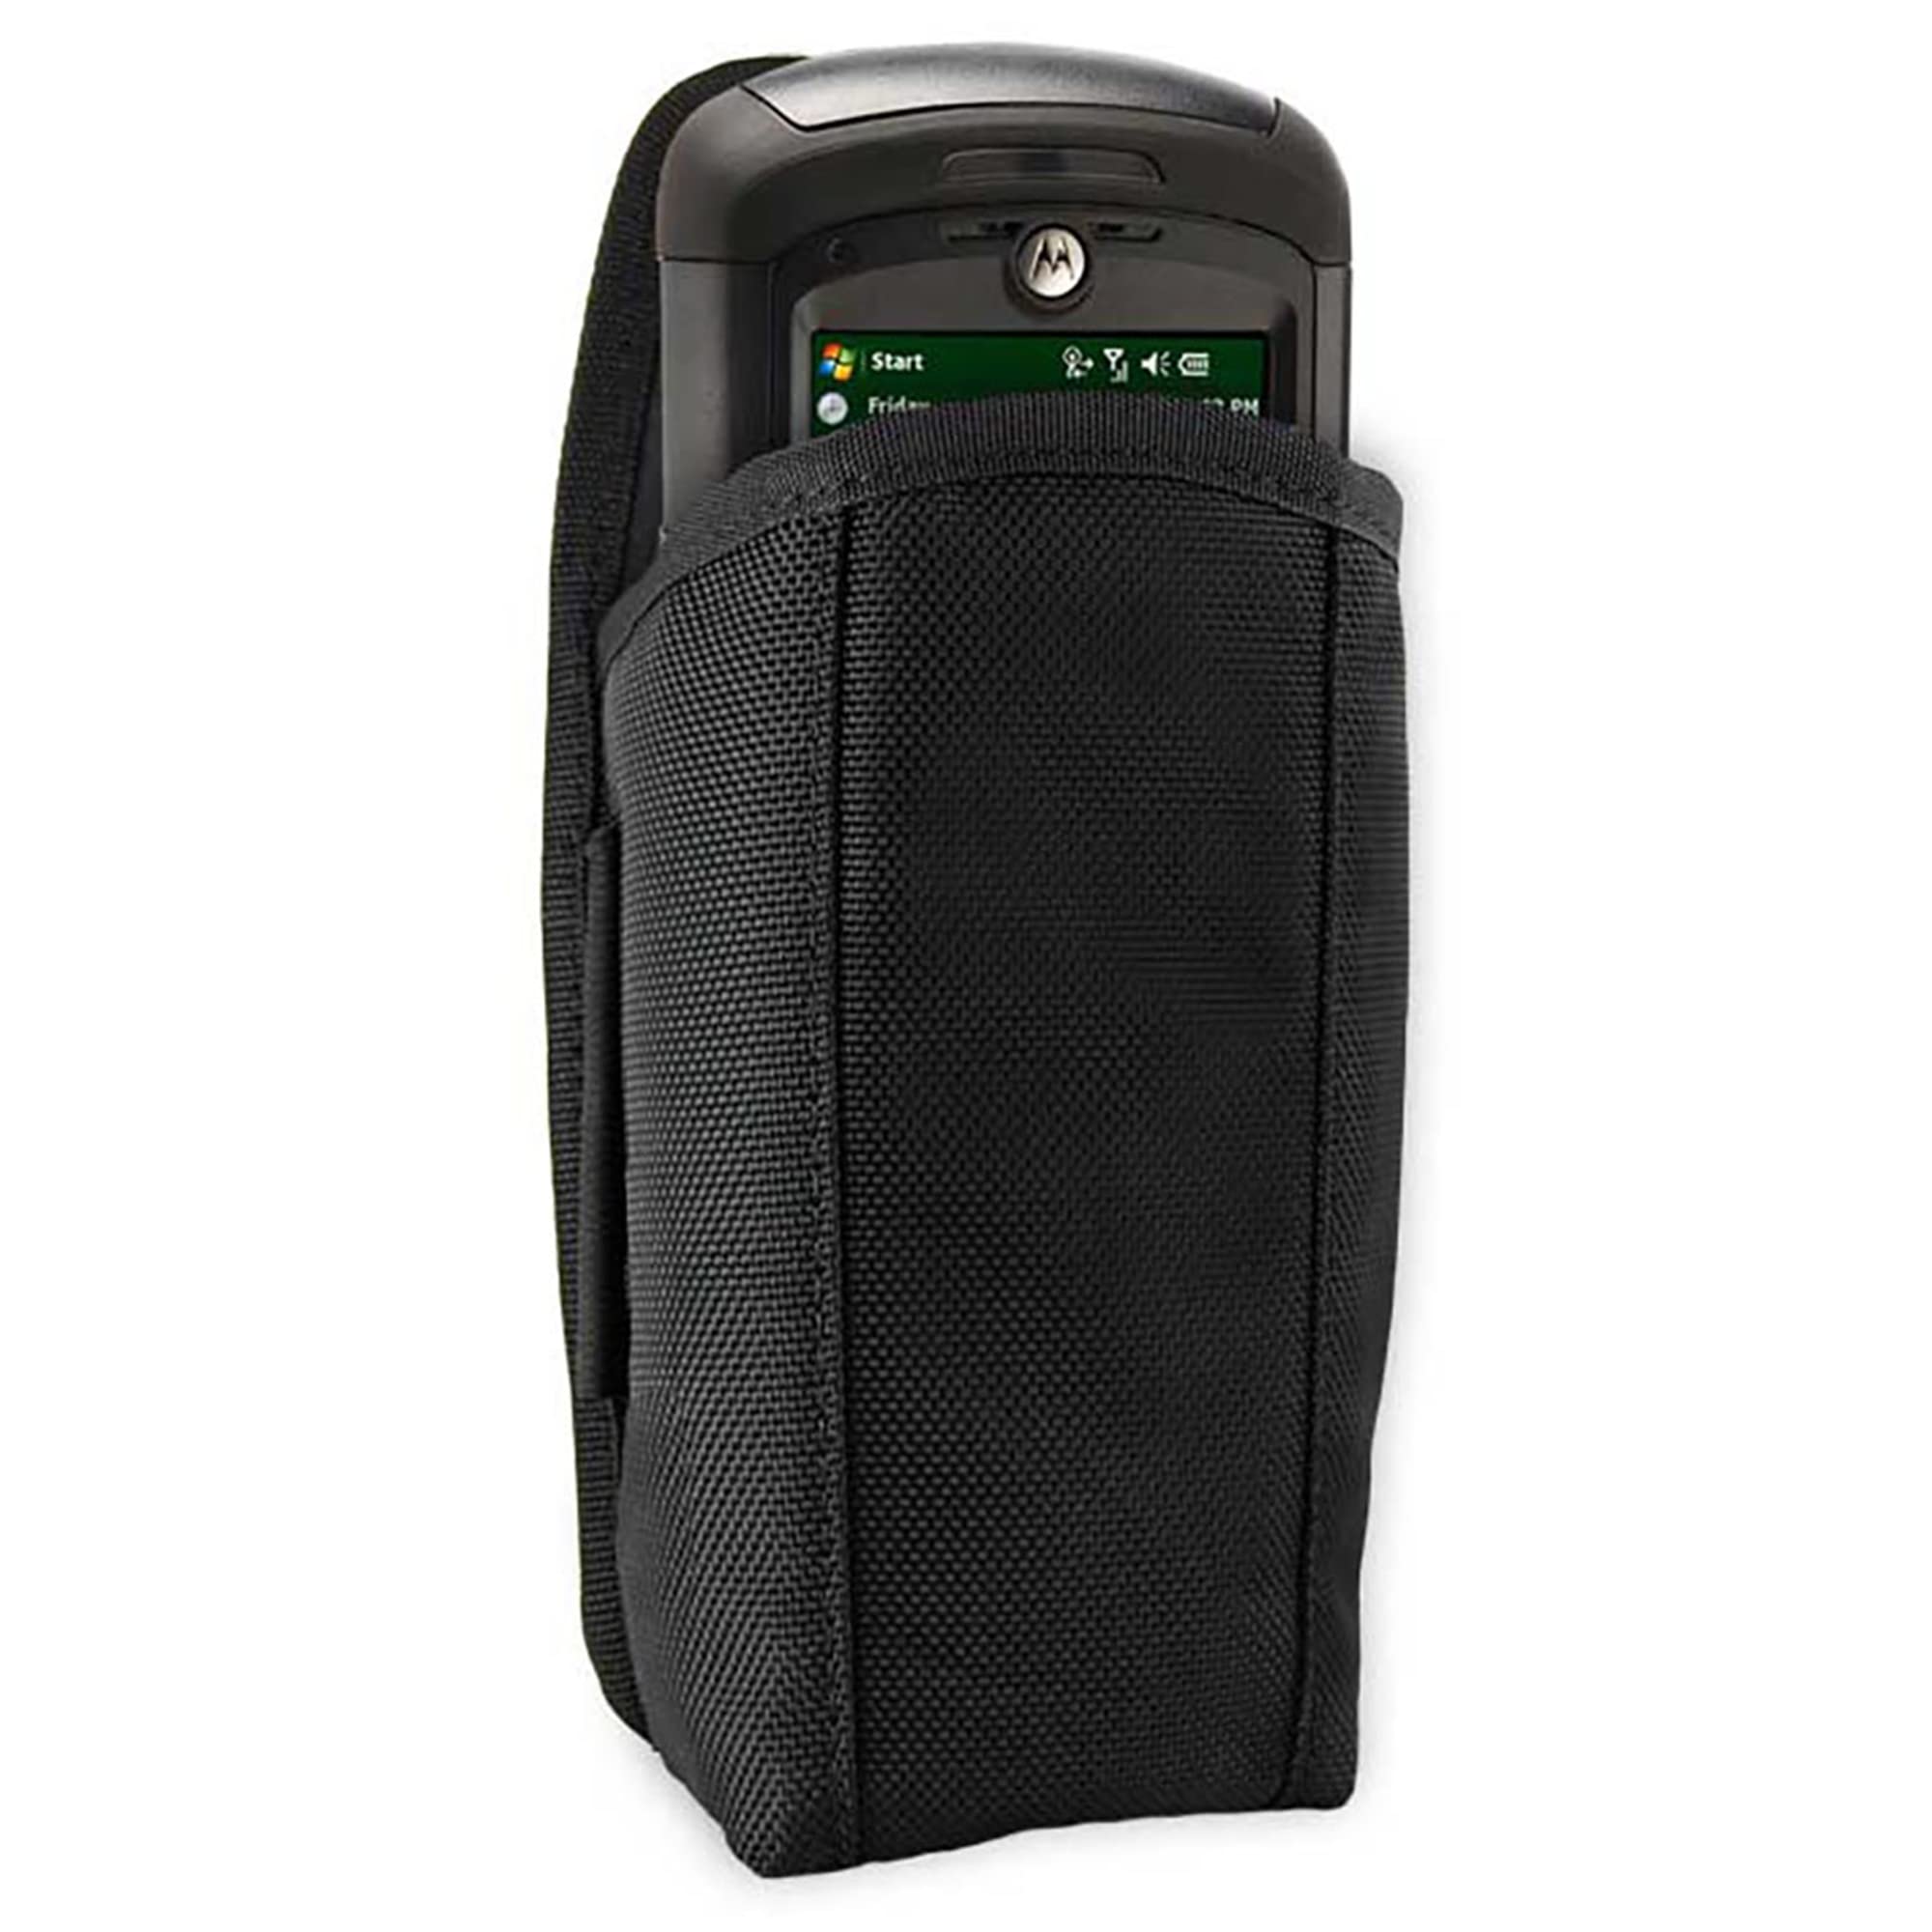 e-Holster Zebra Scanner Holster for Large Barcode Scanners | Ballistic Nylon Carrying Case Pouch Without Pistol-Grip | Belt Clip, Belt Loop, Shoulder Strap | Fits Zebra MC9500/9300/9200